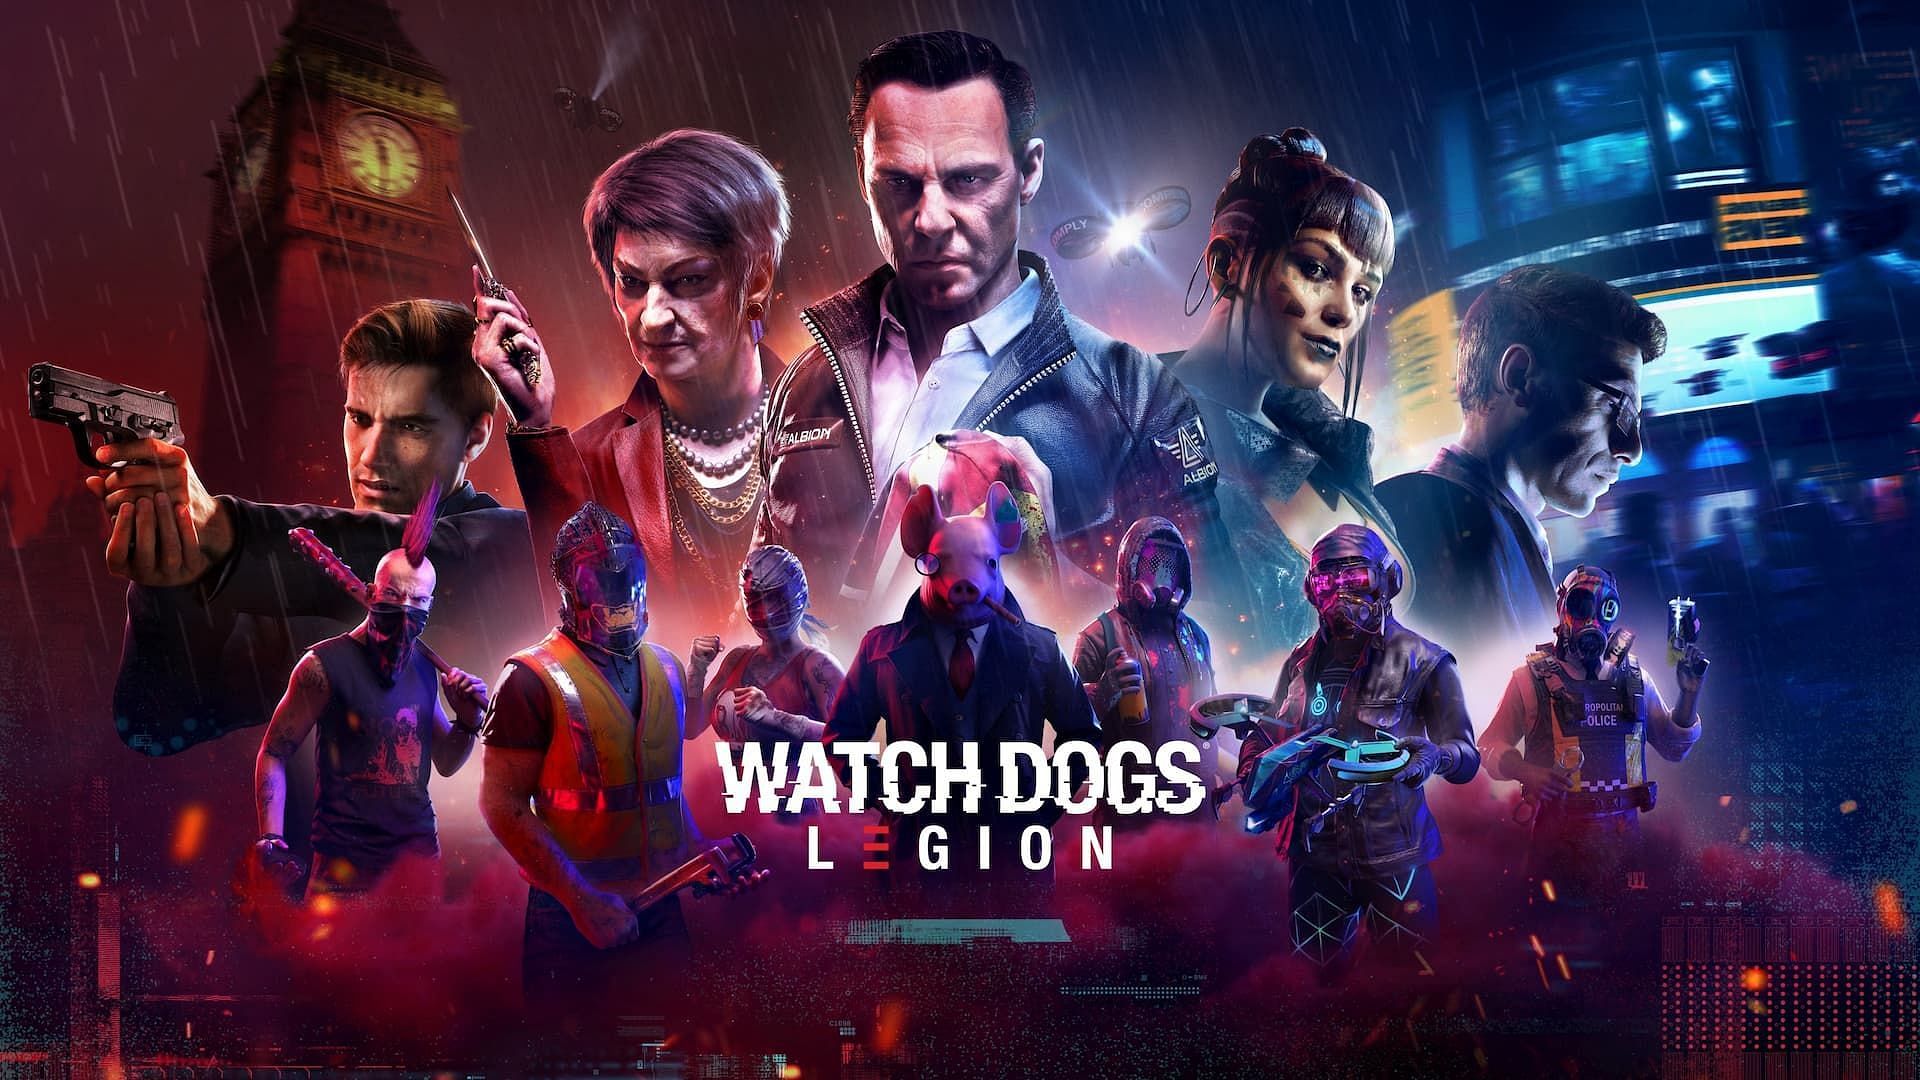 Watch Dogs Legion Gameplay - Open World Free Roam 